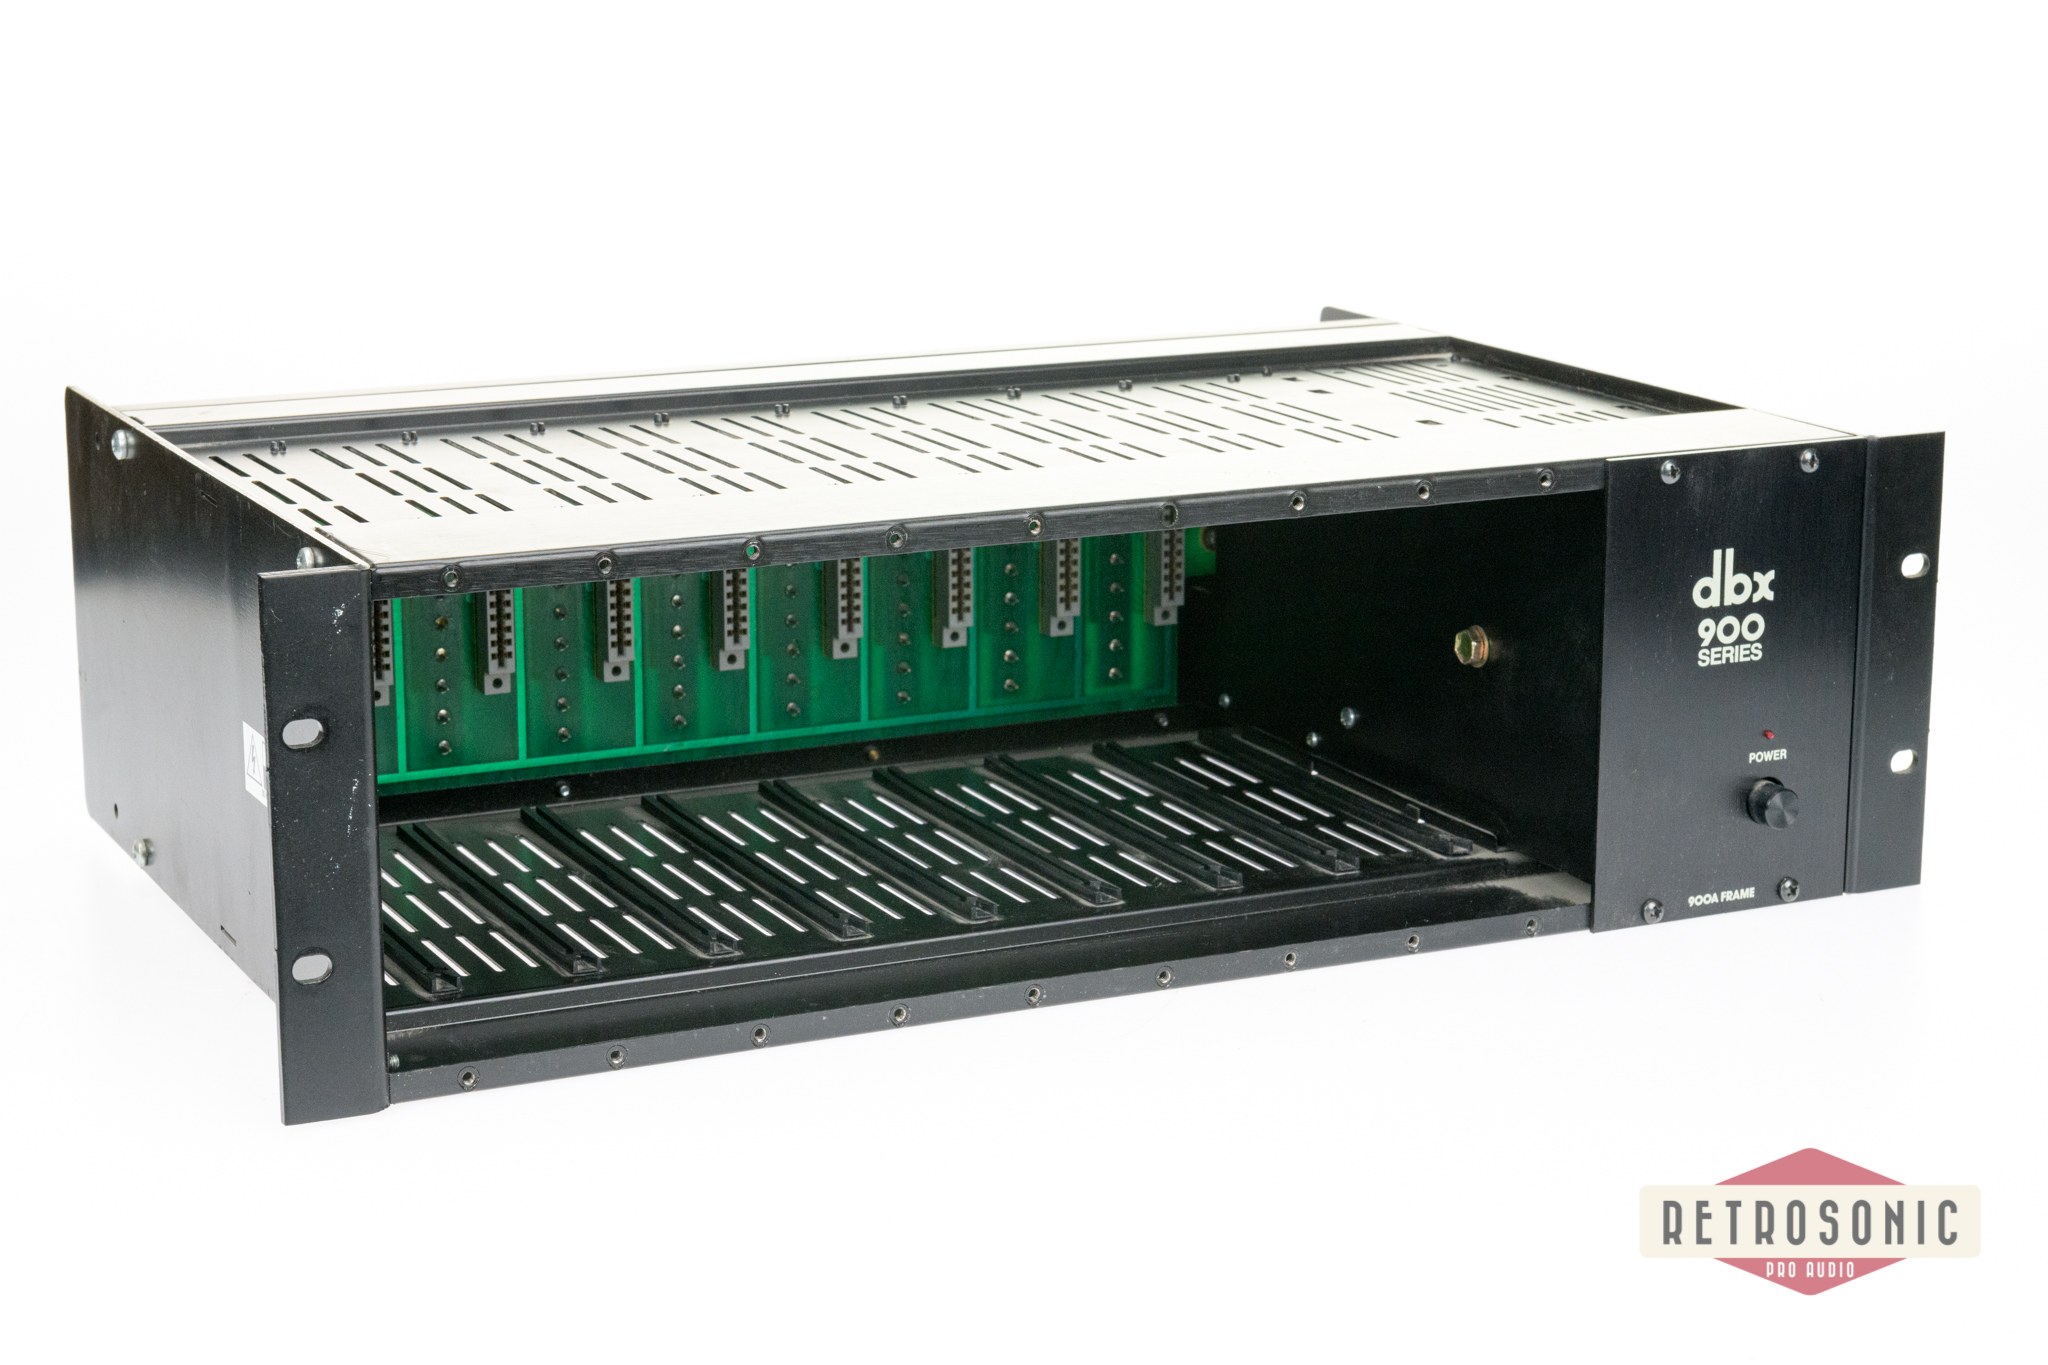 DBX 900 9-Slot Rack